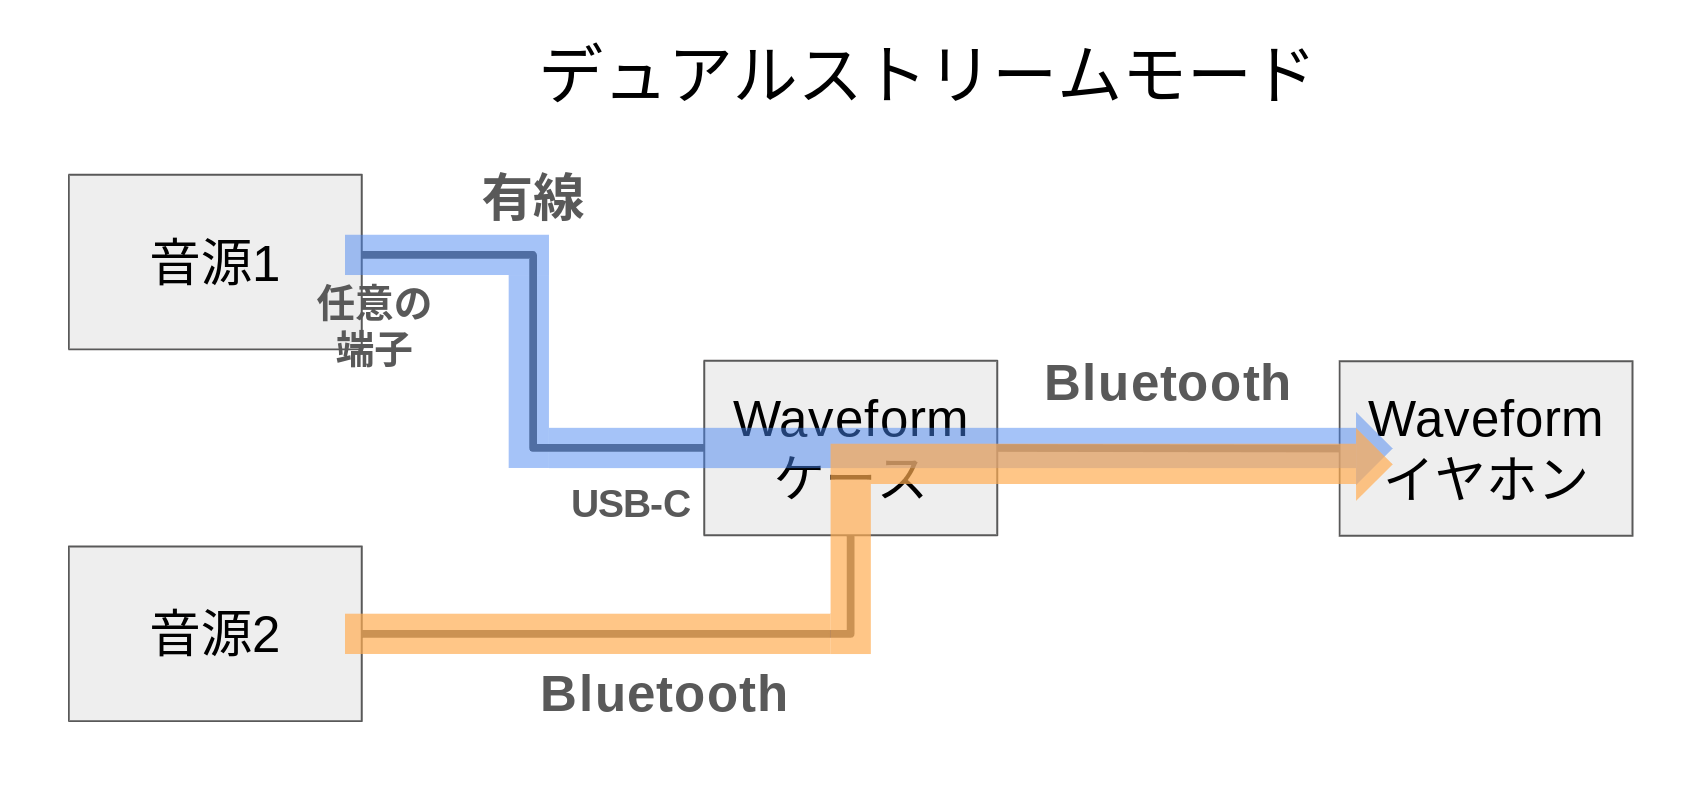 GENKI Waveformレビュー 接続系統図 デュアルストリームモード